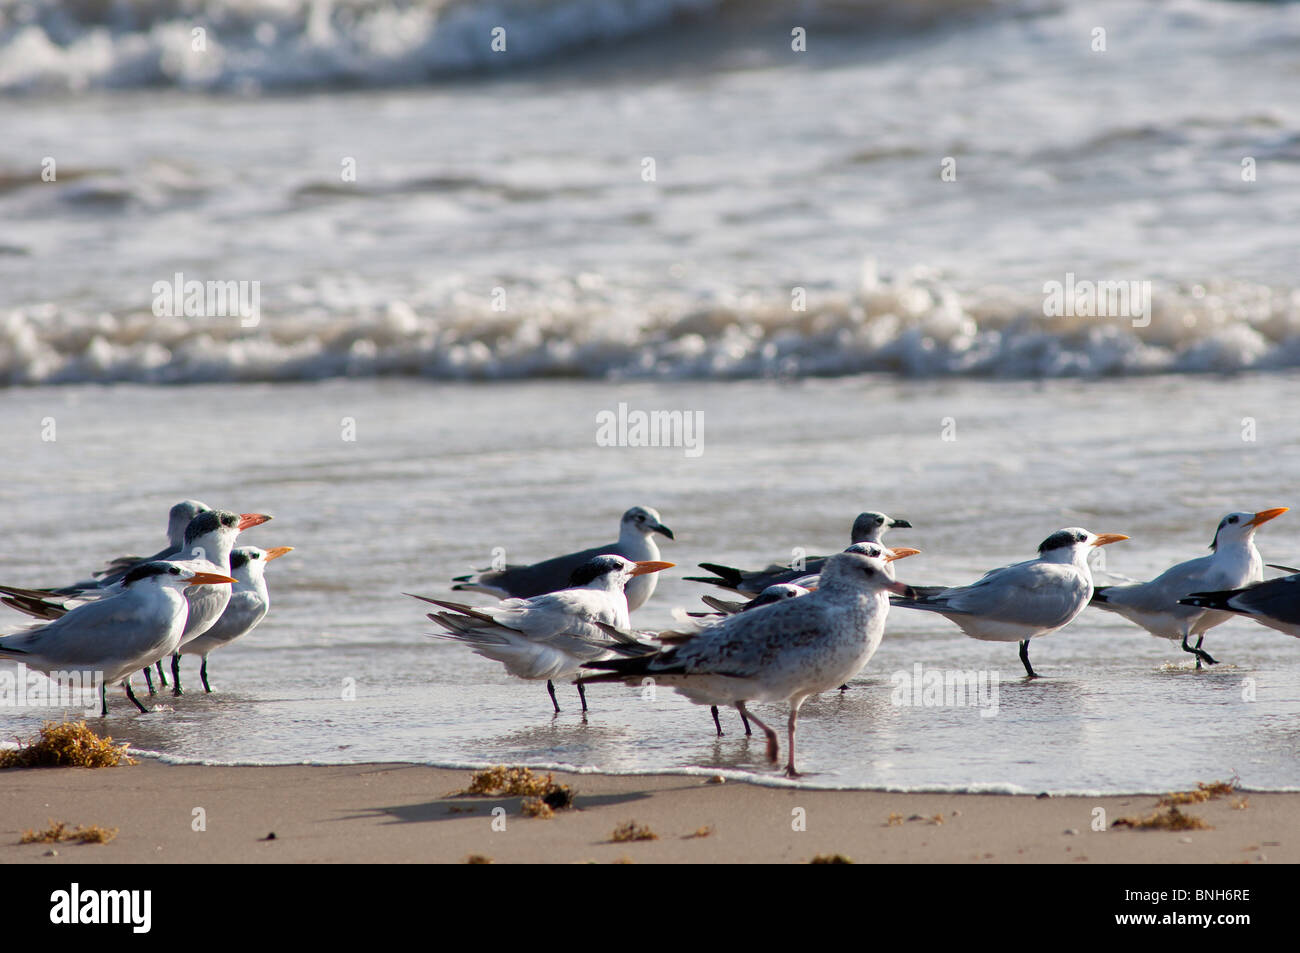 Texas, Padre Island. Shore birds in Padre Island National Seashore. Stock Photo